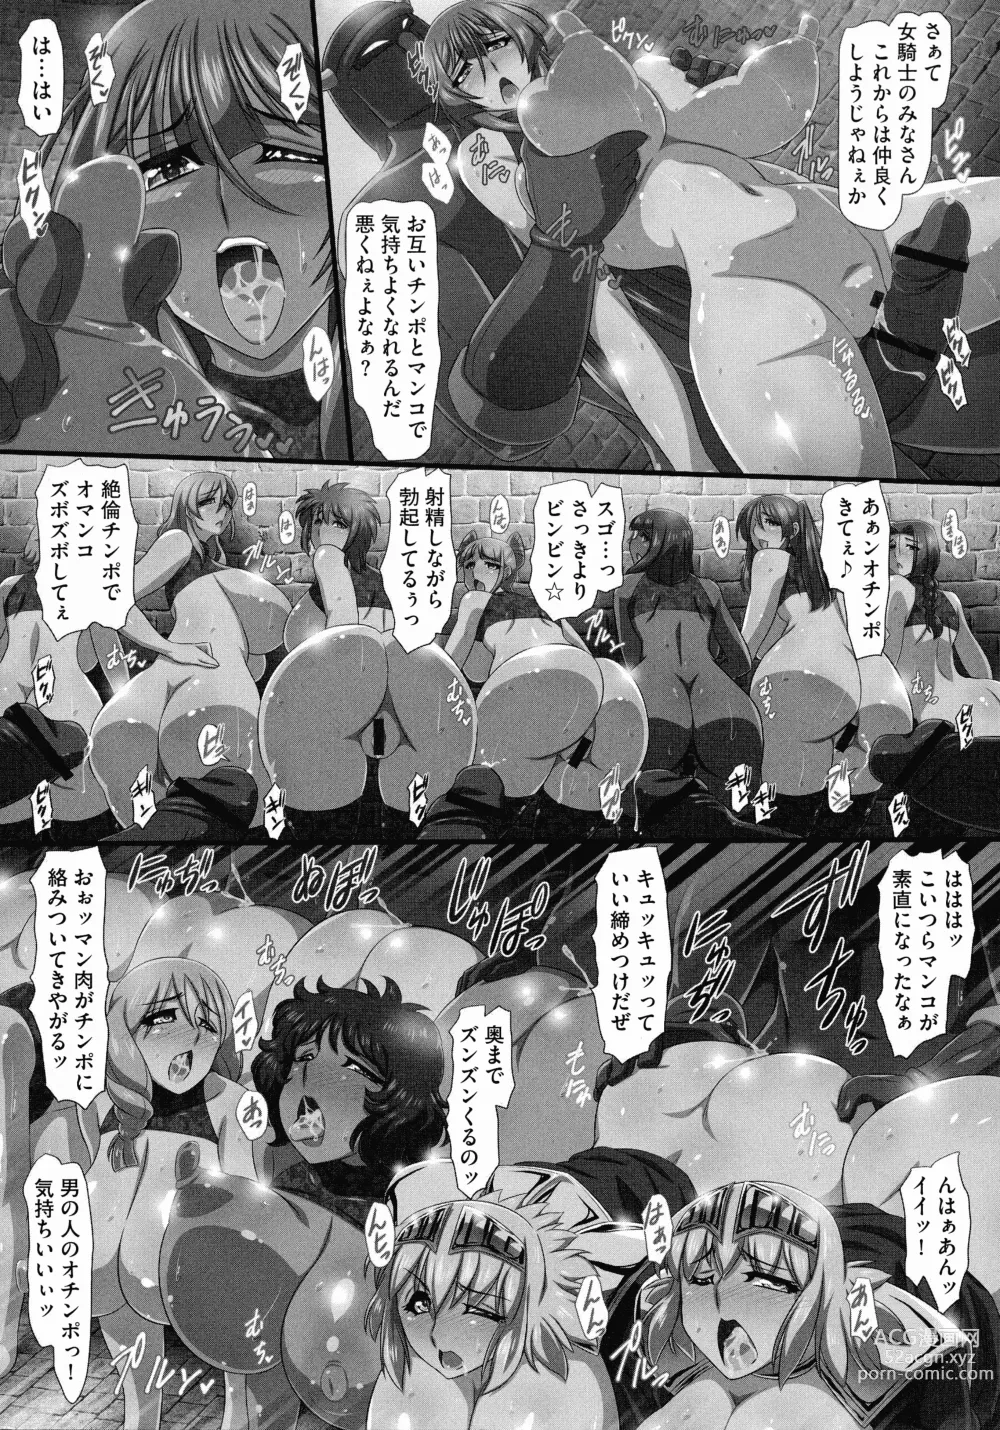 Page 191 of manga Bakunyuu Oppai Dai Harem!!